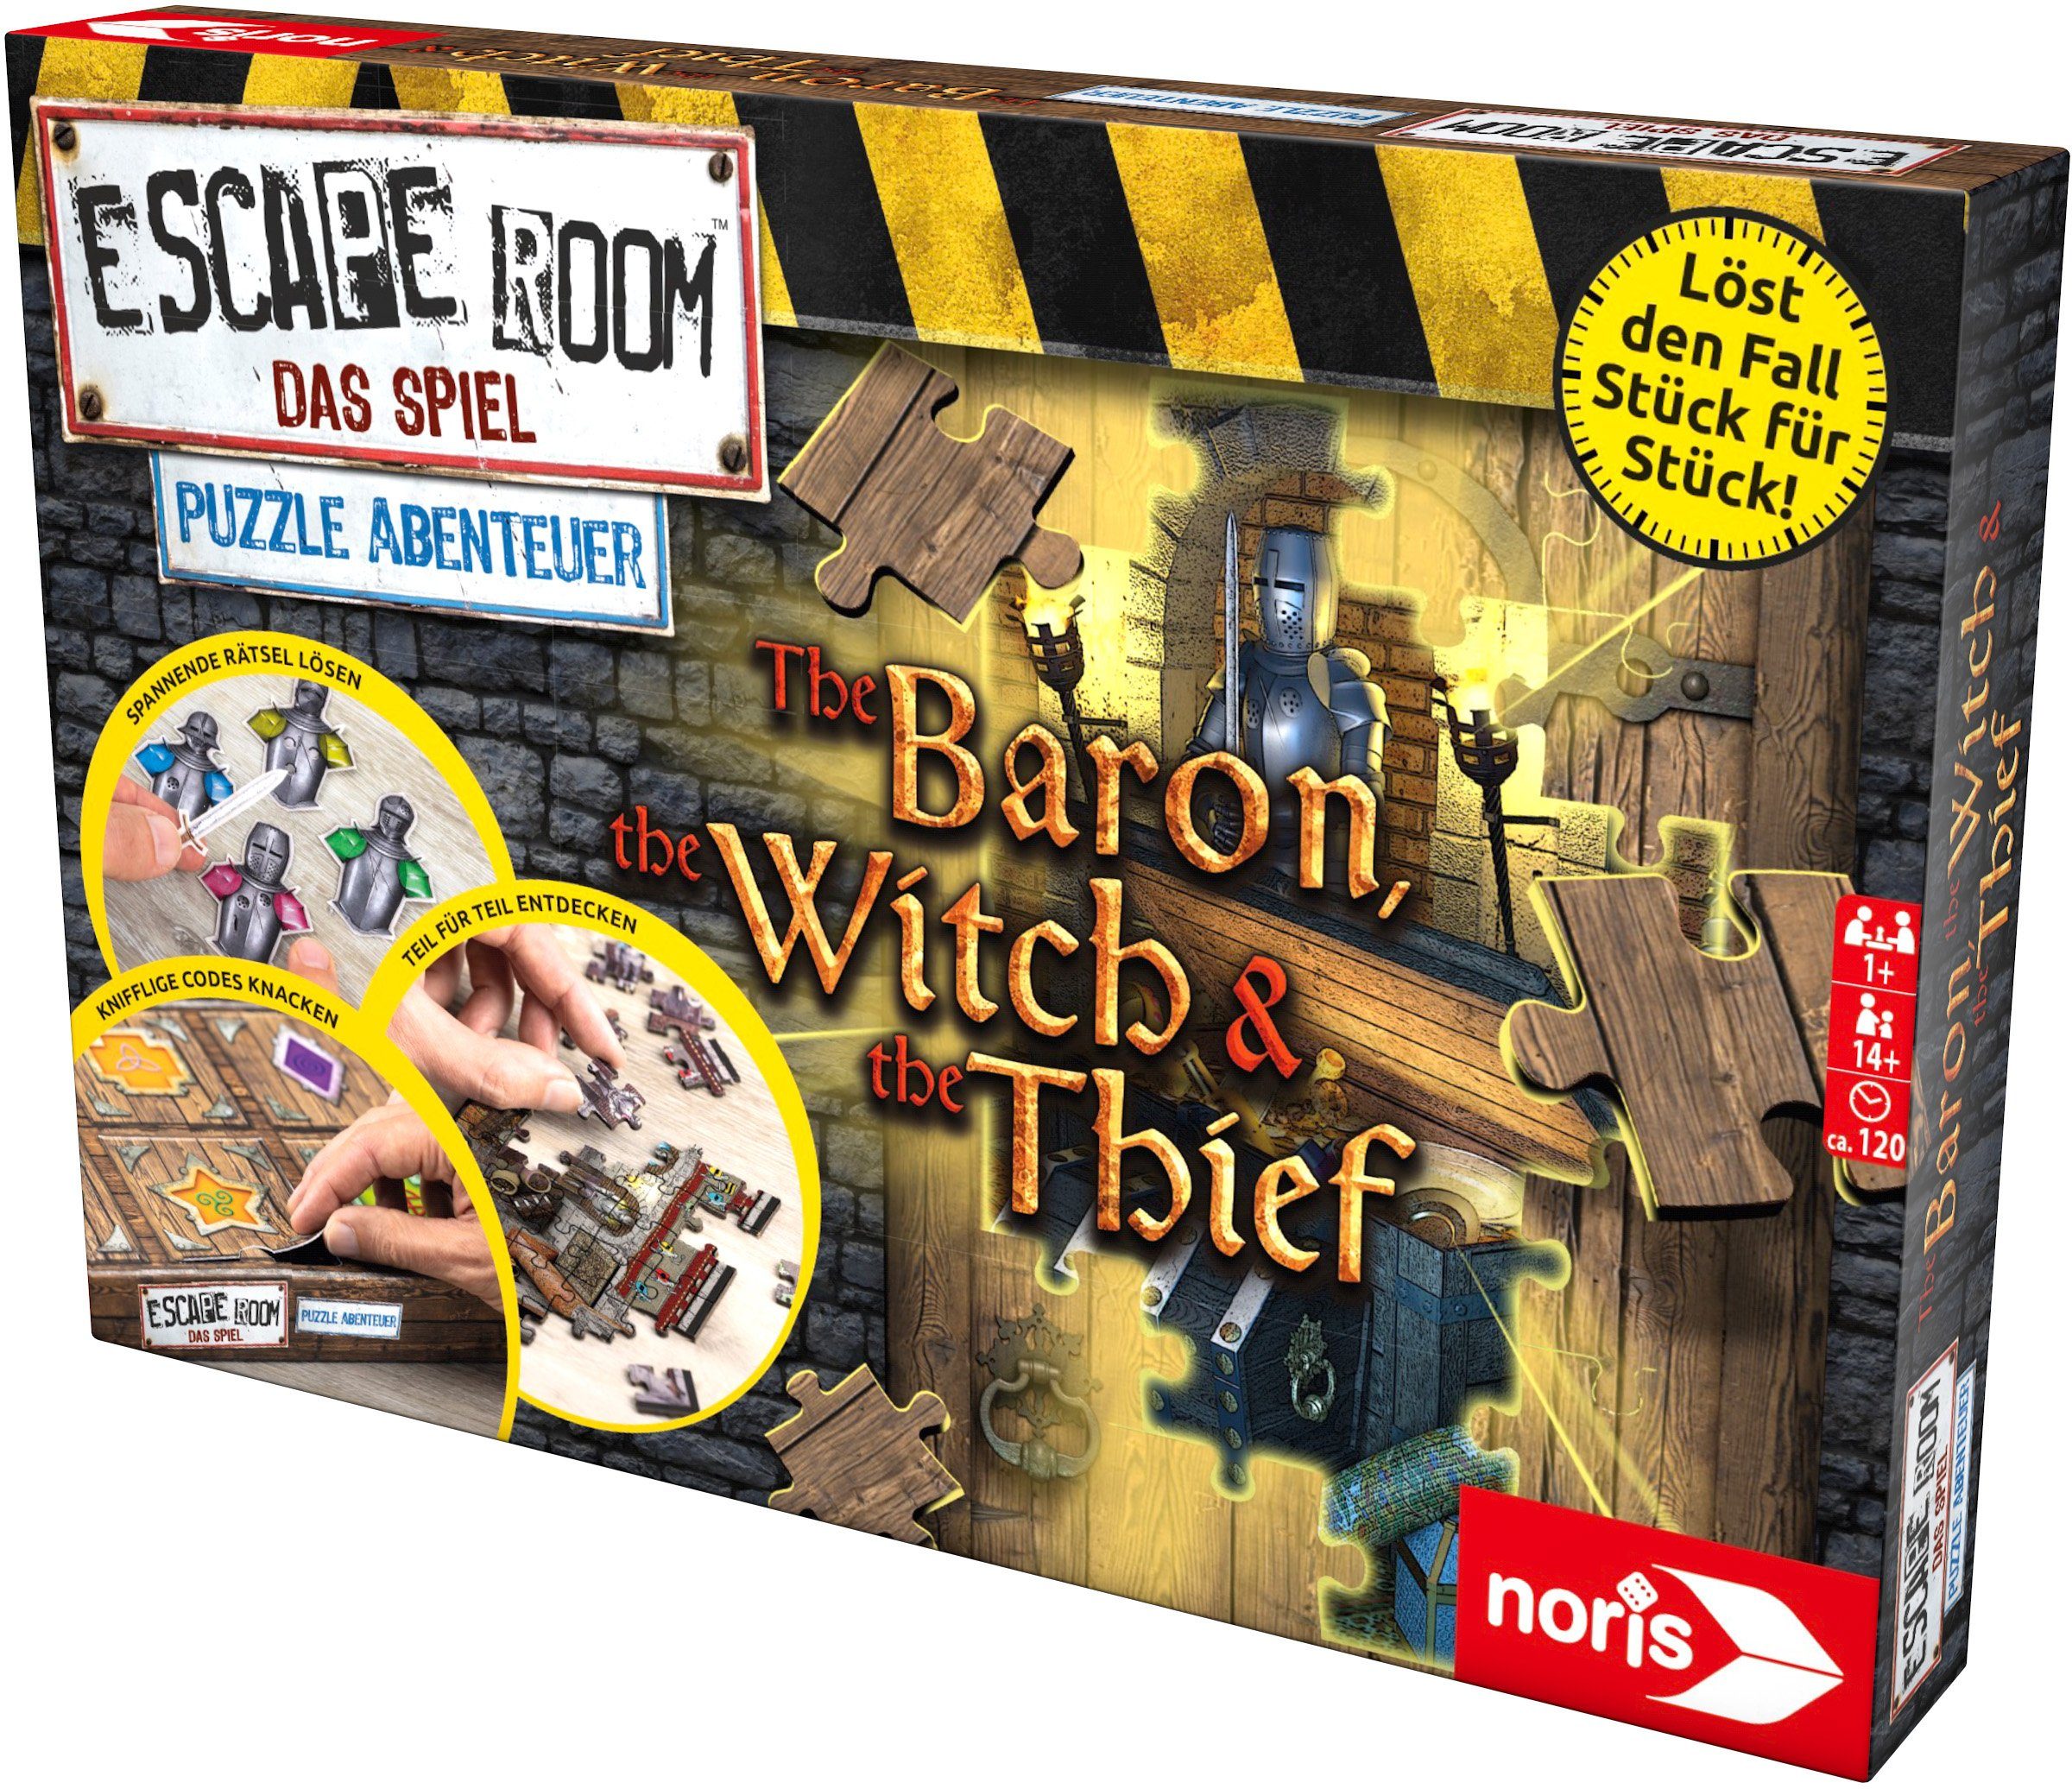 Noris Spiel, Strategiespiel Escape Room Puzzle Abenteuer - The Baron, The Witch & The Thief, Escape Room Das Spiel